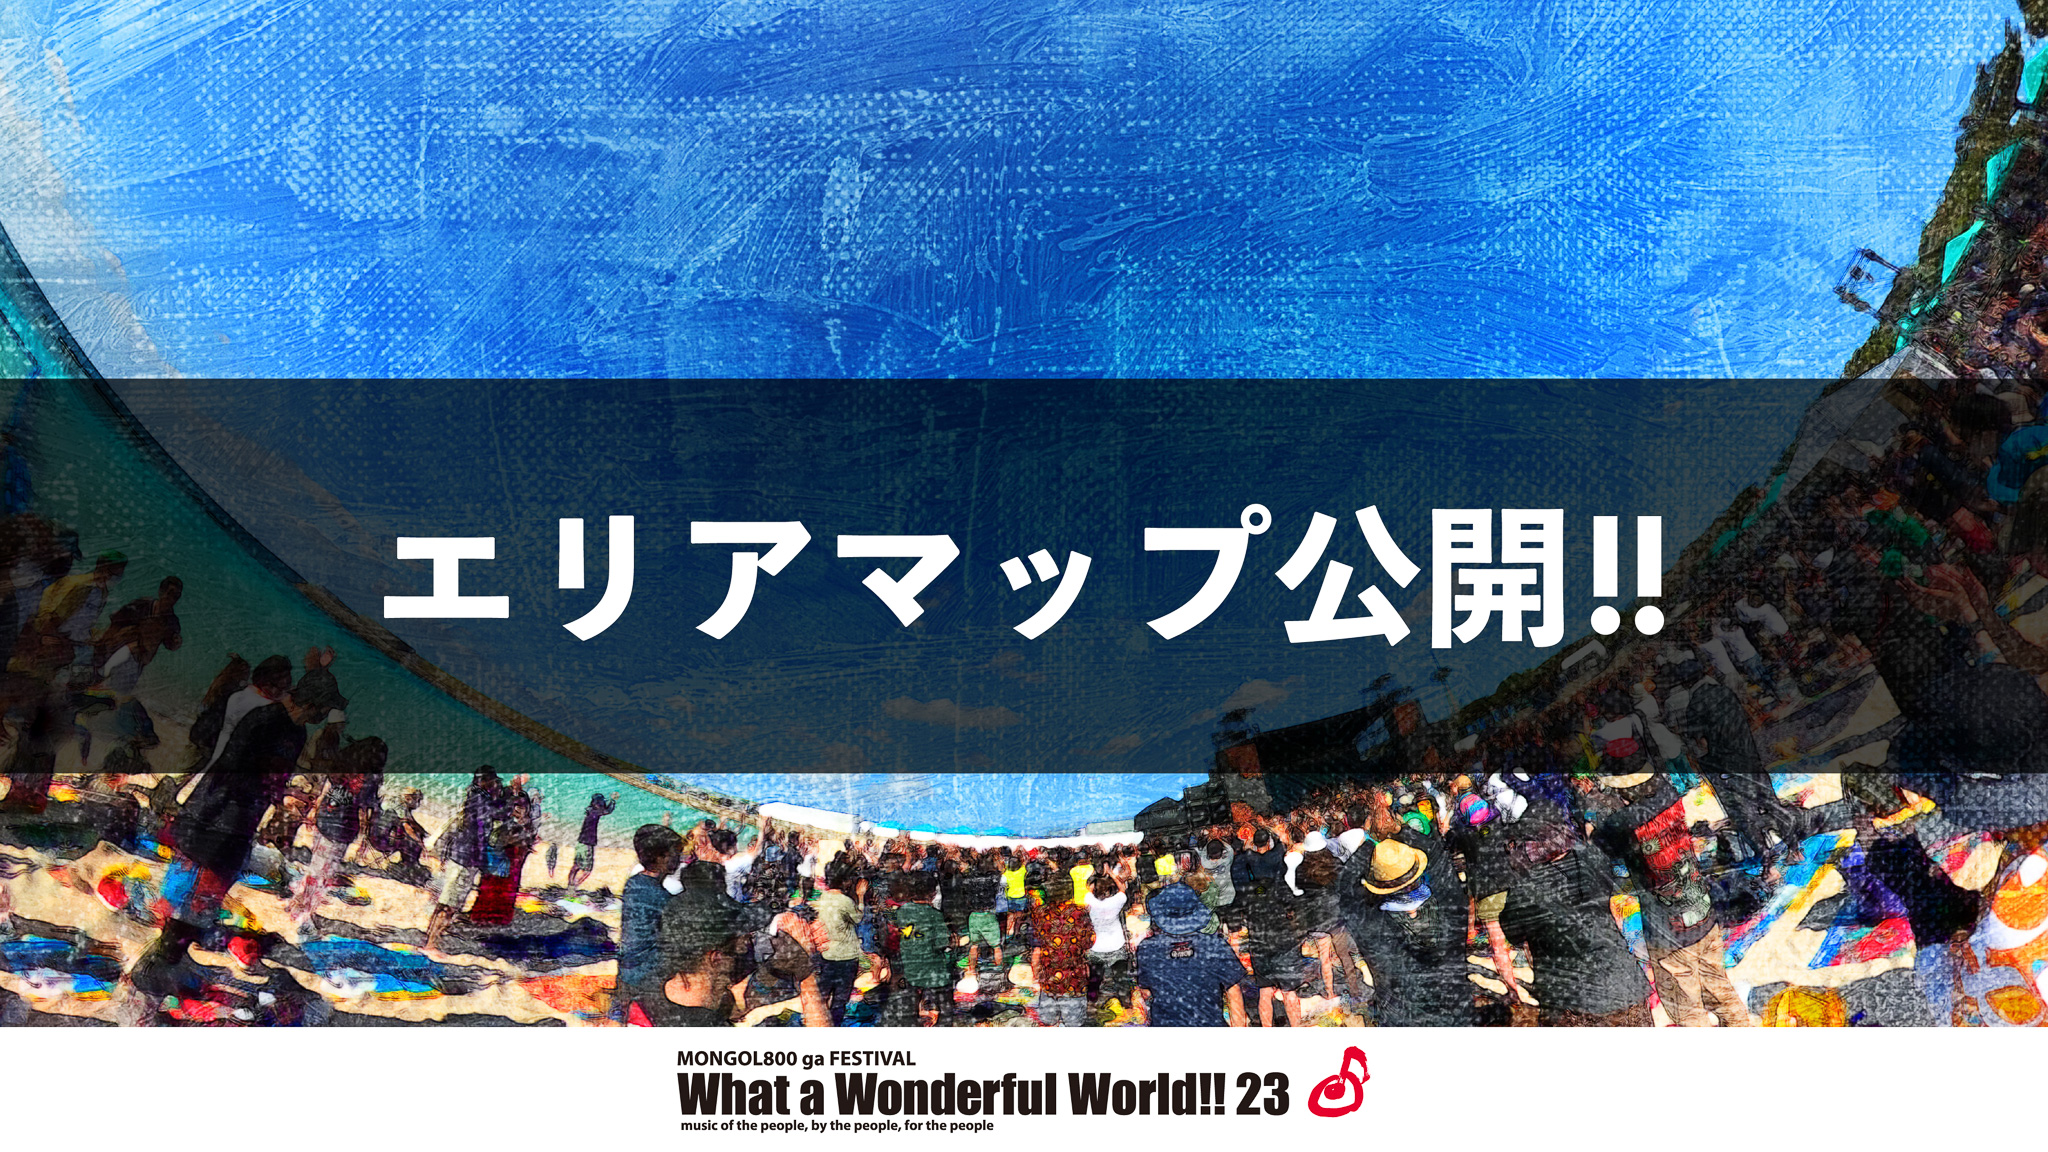 WWW!!23 エリアマップ公開🎉 - What a Wonderful World!! 23